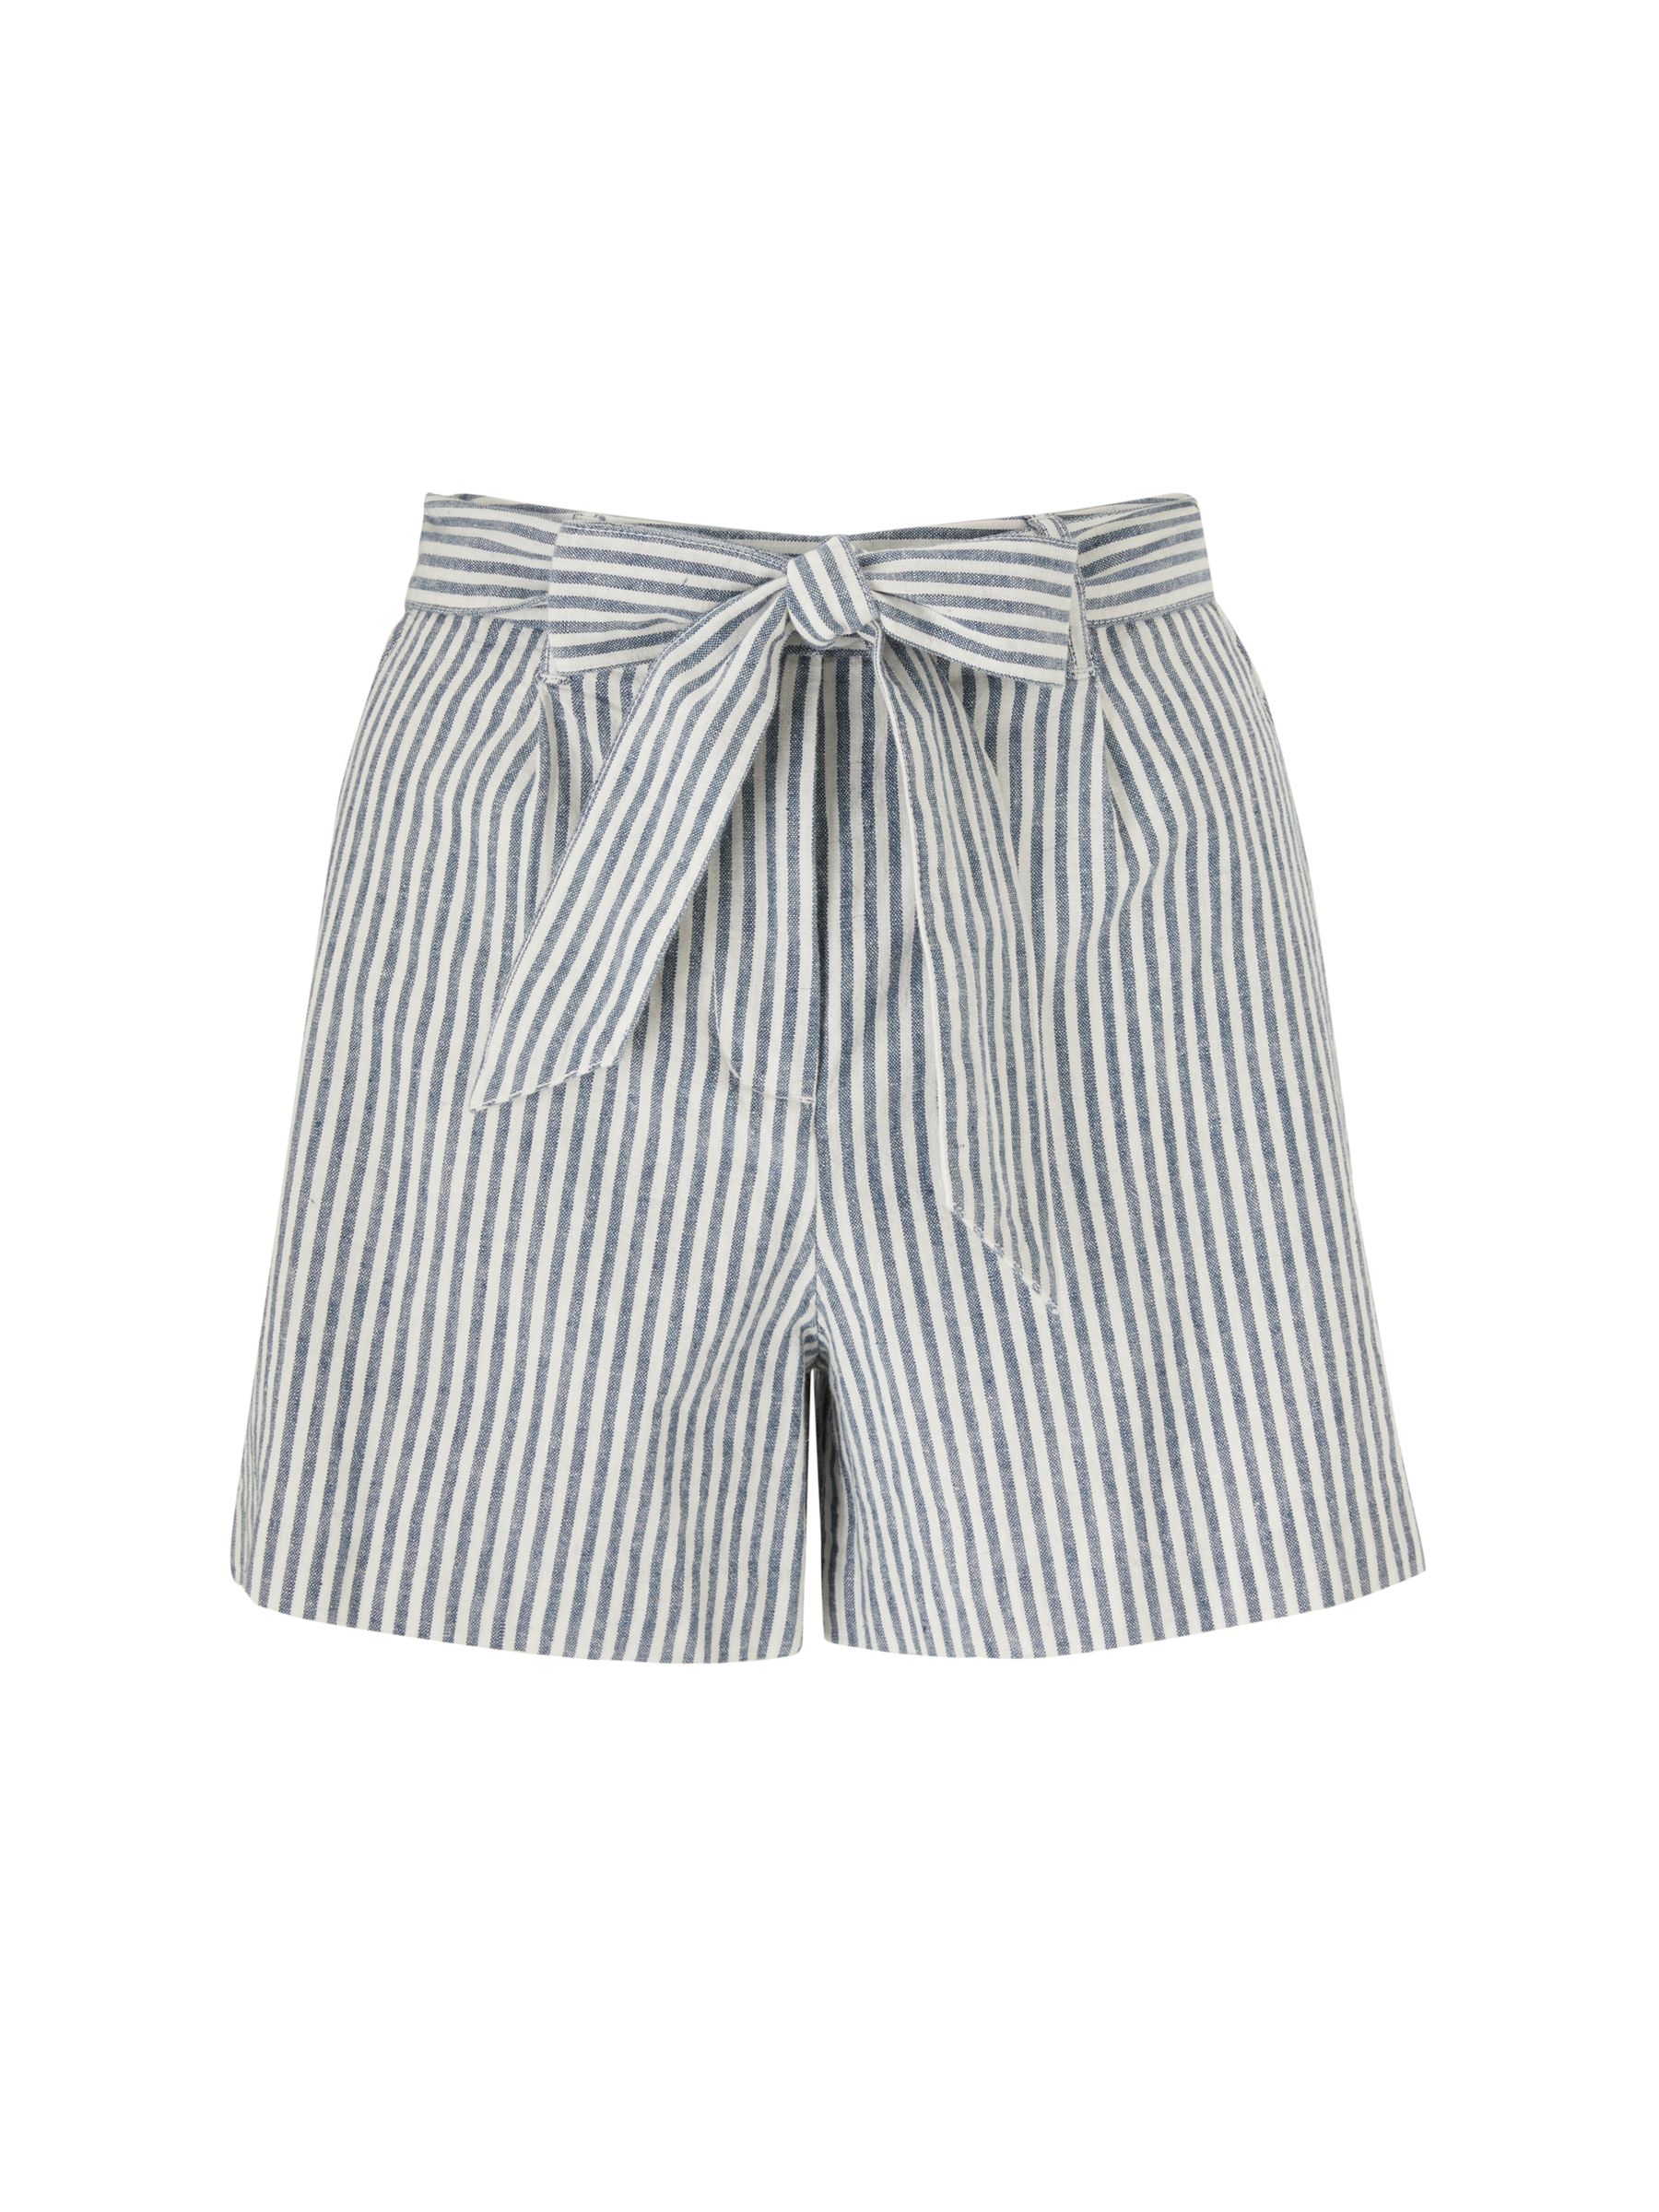 Boden Cora Shorts, Chambray Blue/Ivory Stripe